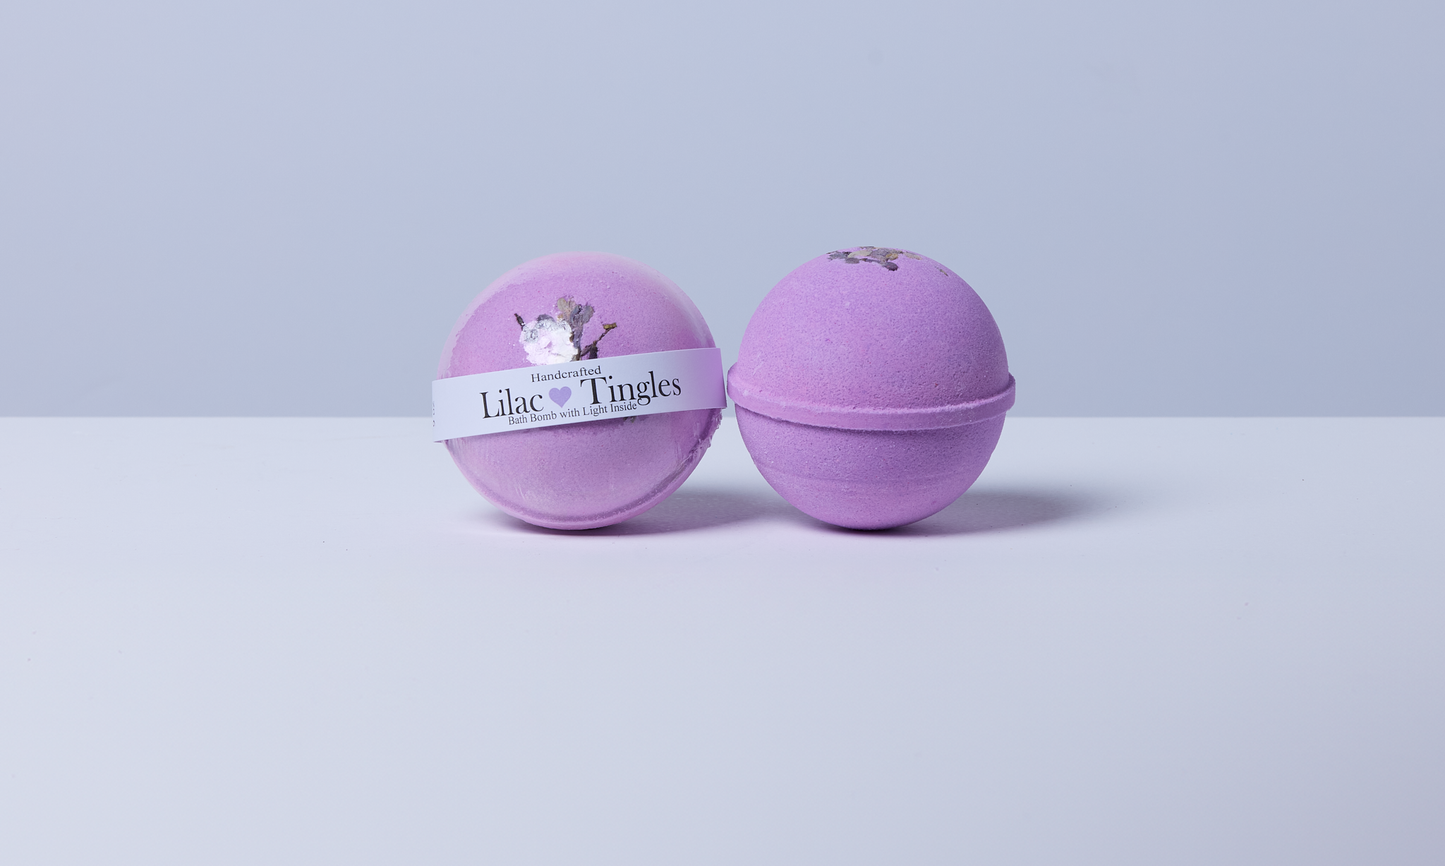 Lilac Tingles Bath Bomb with LED Light